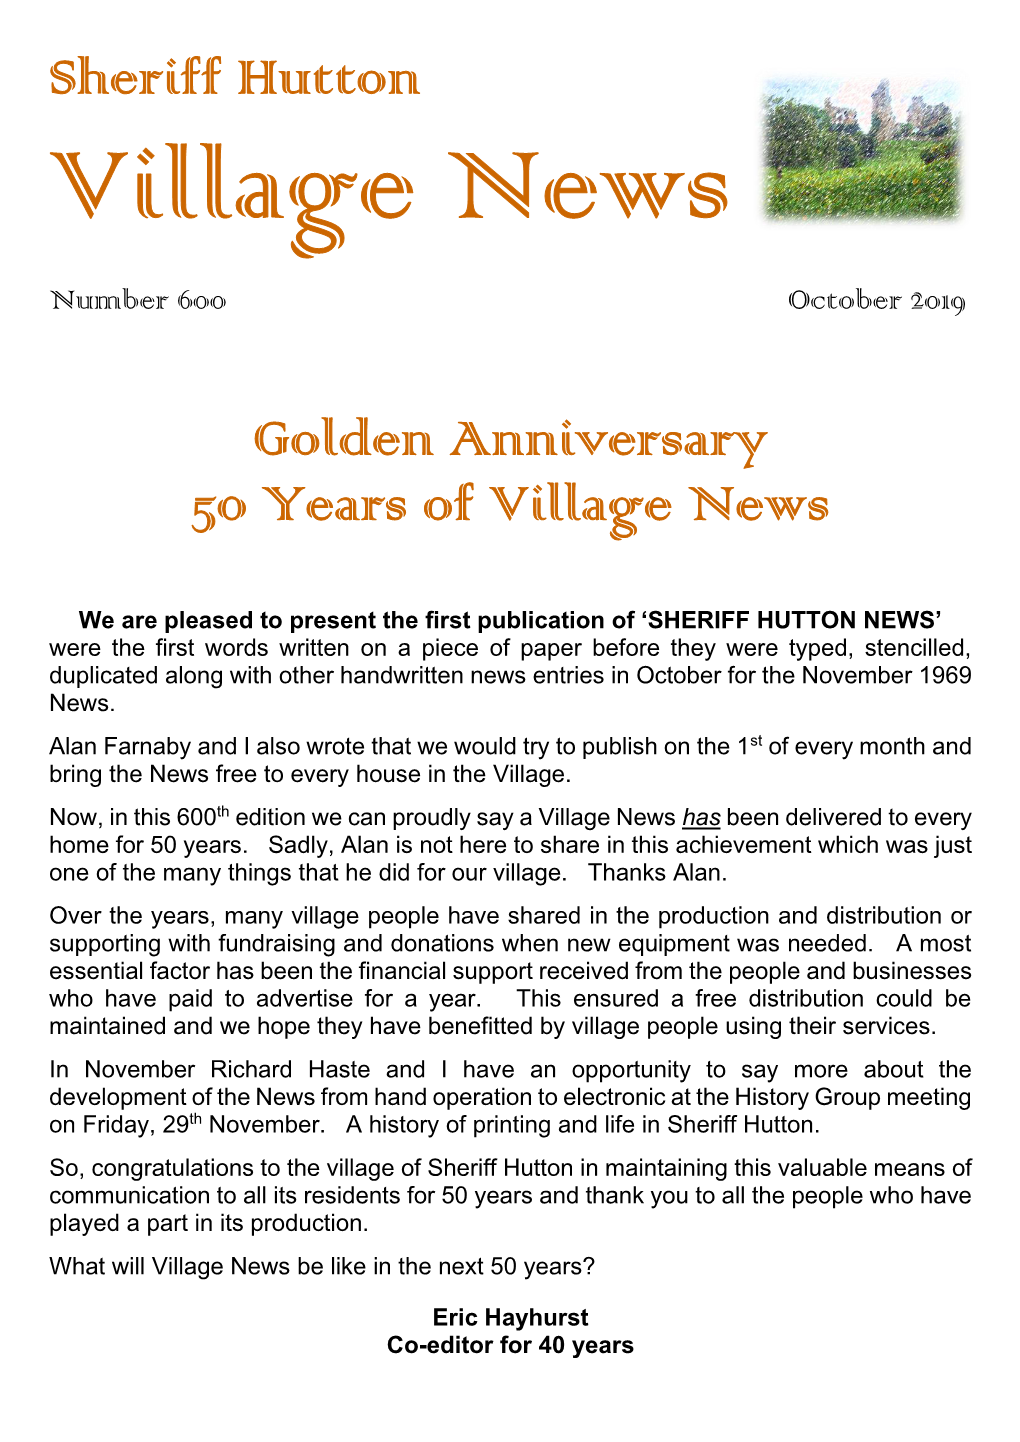 Sheriff Hutton Golden Anniversary 50 Years of Village News